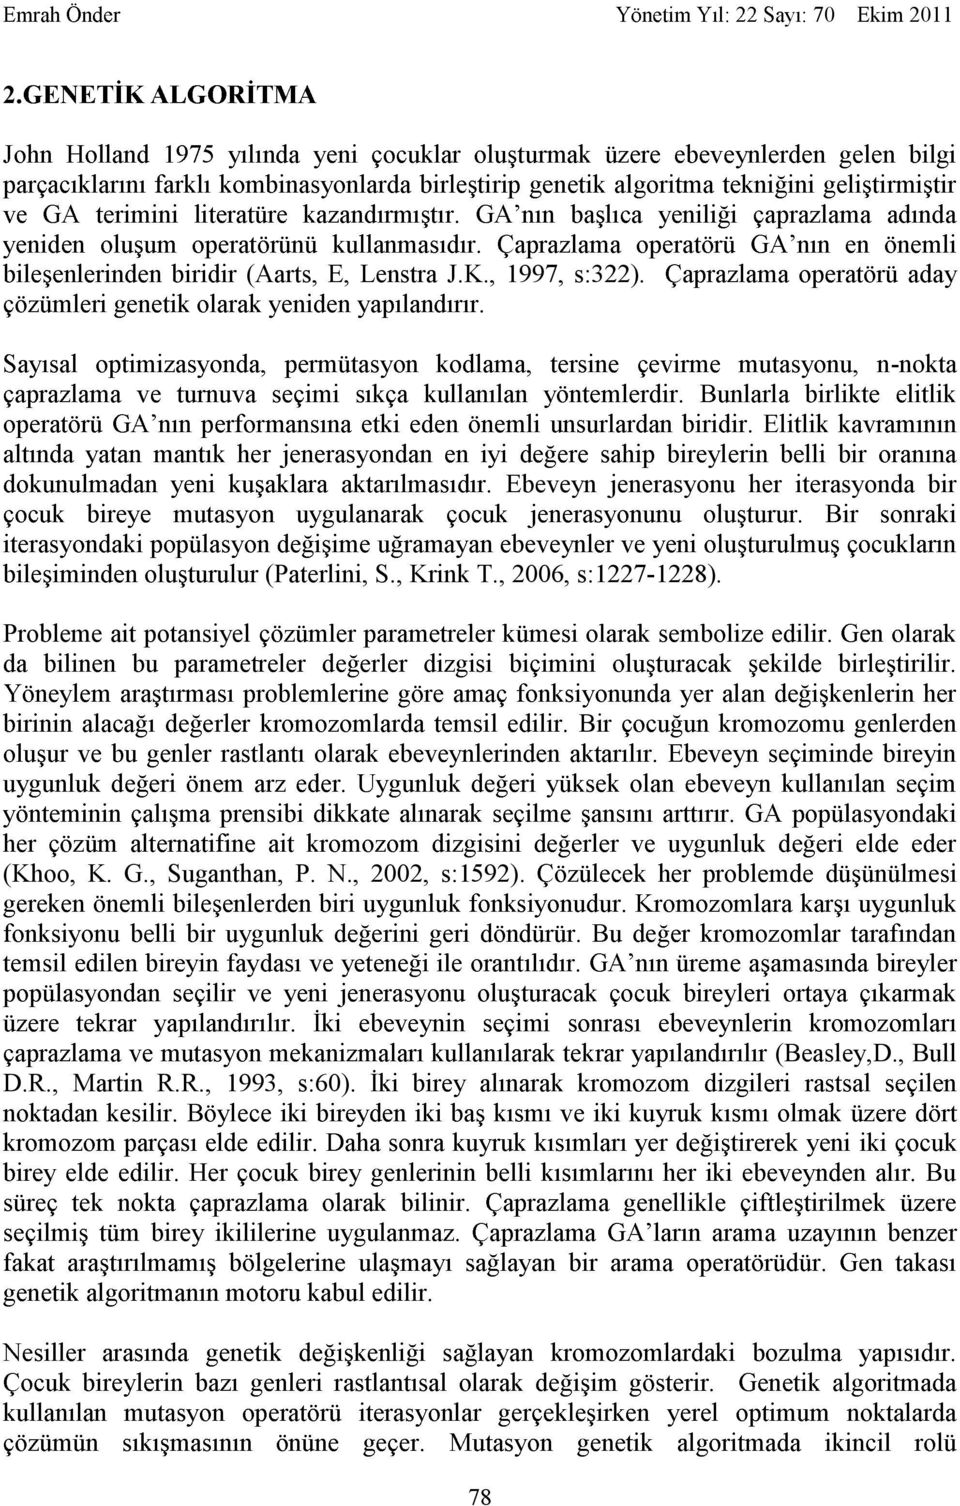 potansyel (Paterln, S., Krnk T., 2006, s:1227-1228).